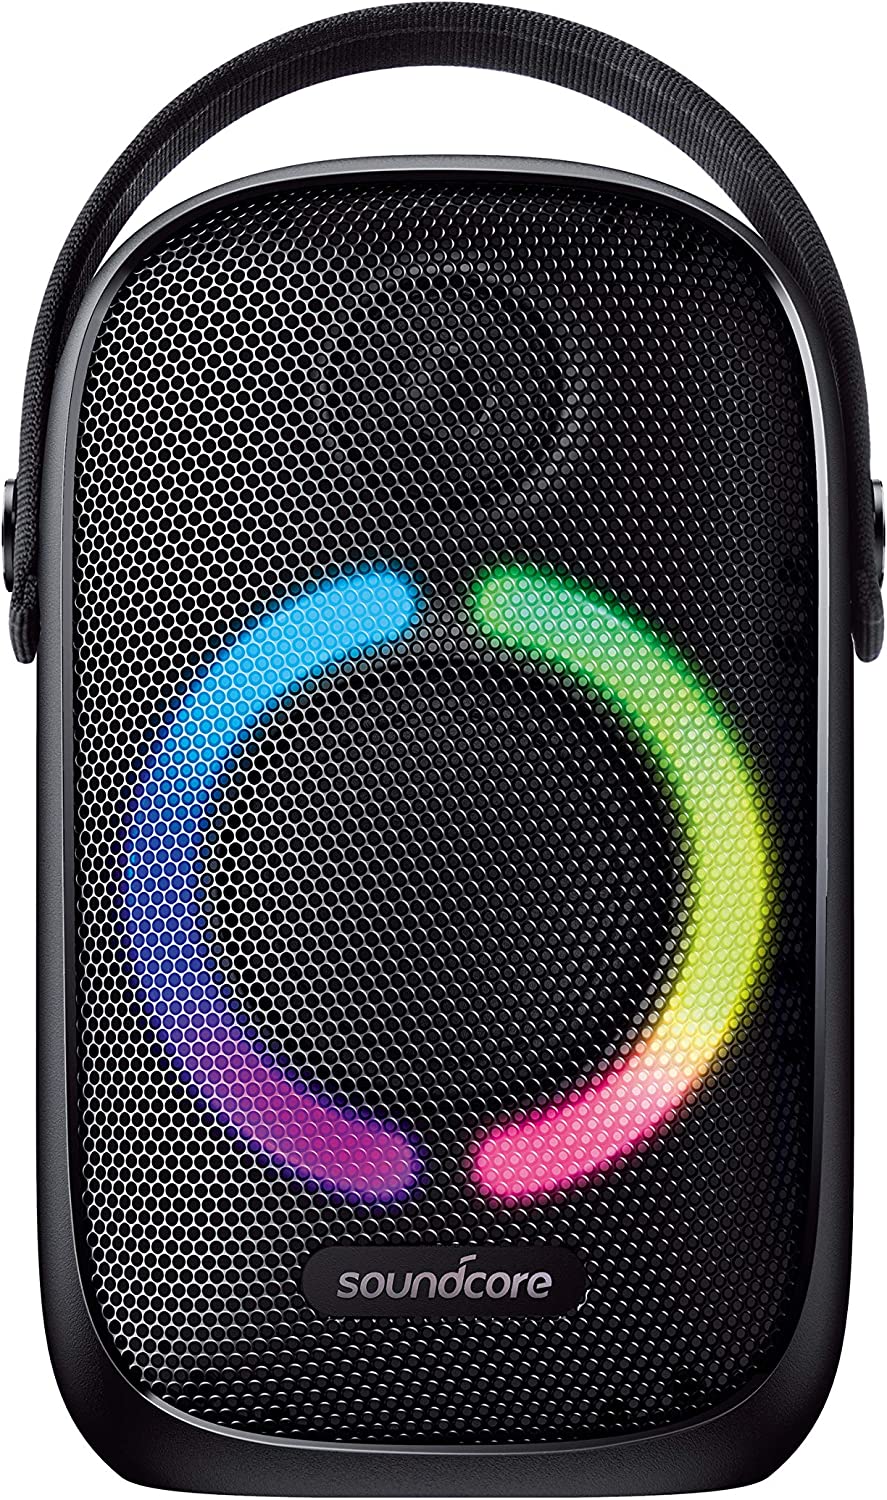 Anker SoundCore Rave Neo Bluetooth Speaker, Black - A3395H11